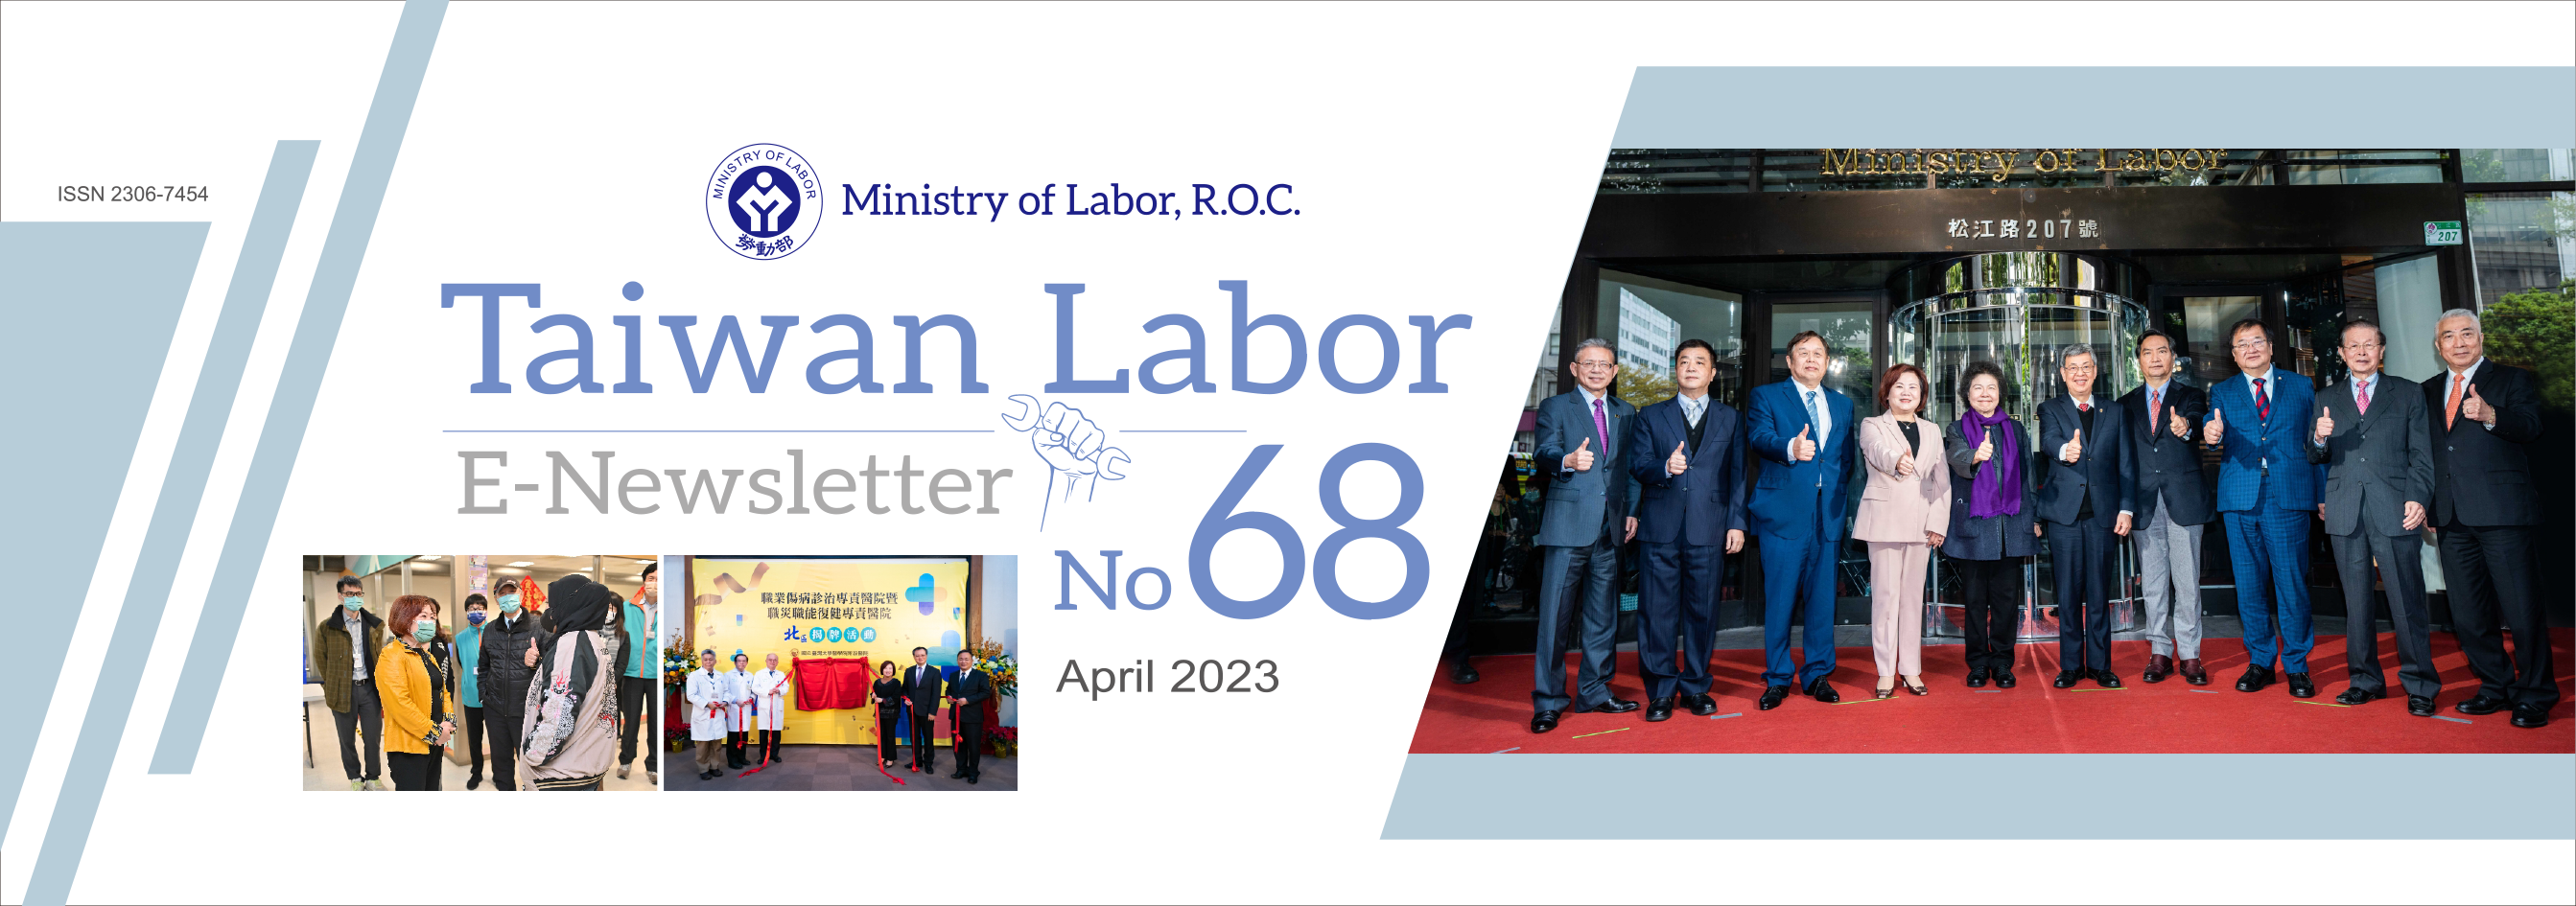 Taiwan Labor E-Newsletter No.68 Banner